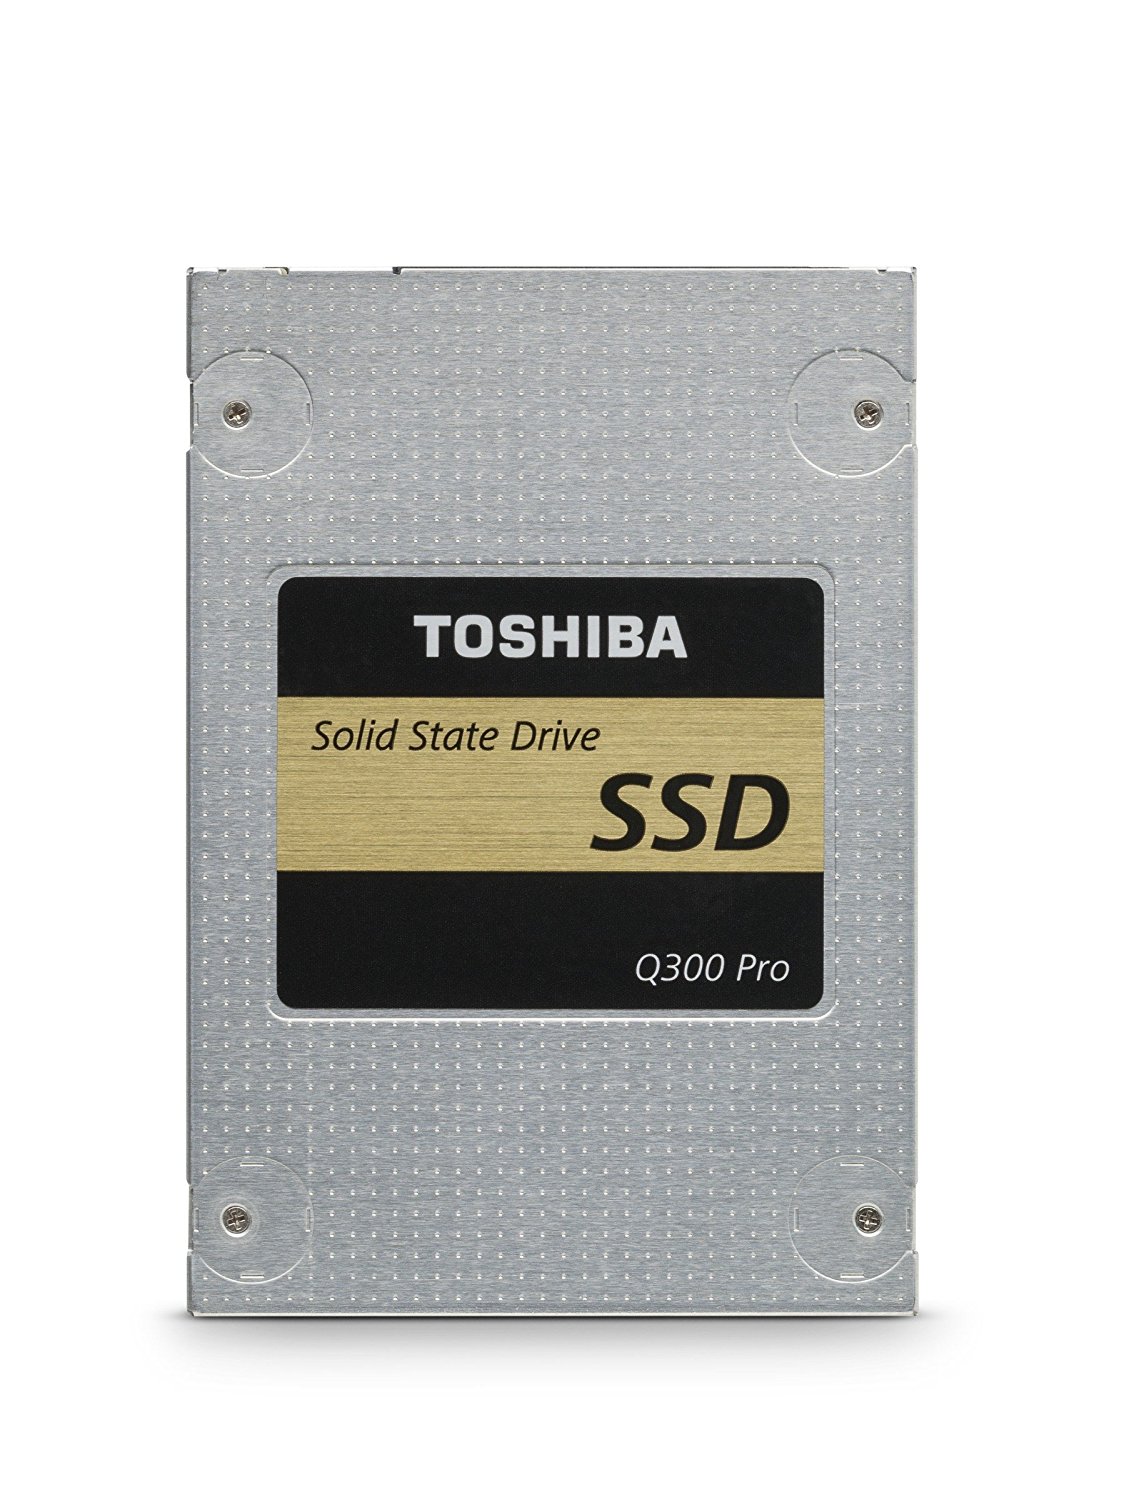 Toshiba Q300 Pro 256GB 2.5-Inch SATA 3.0 Internal SSD